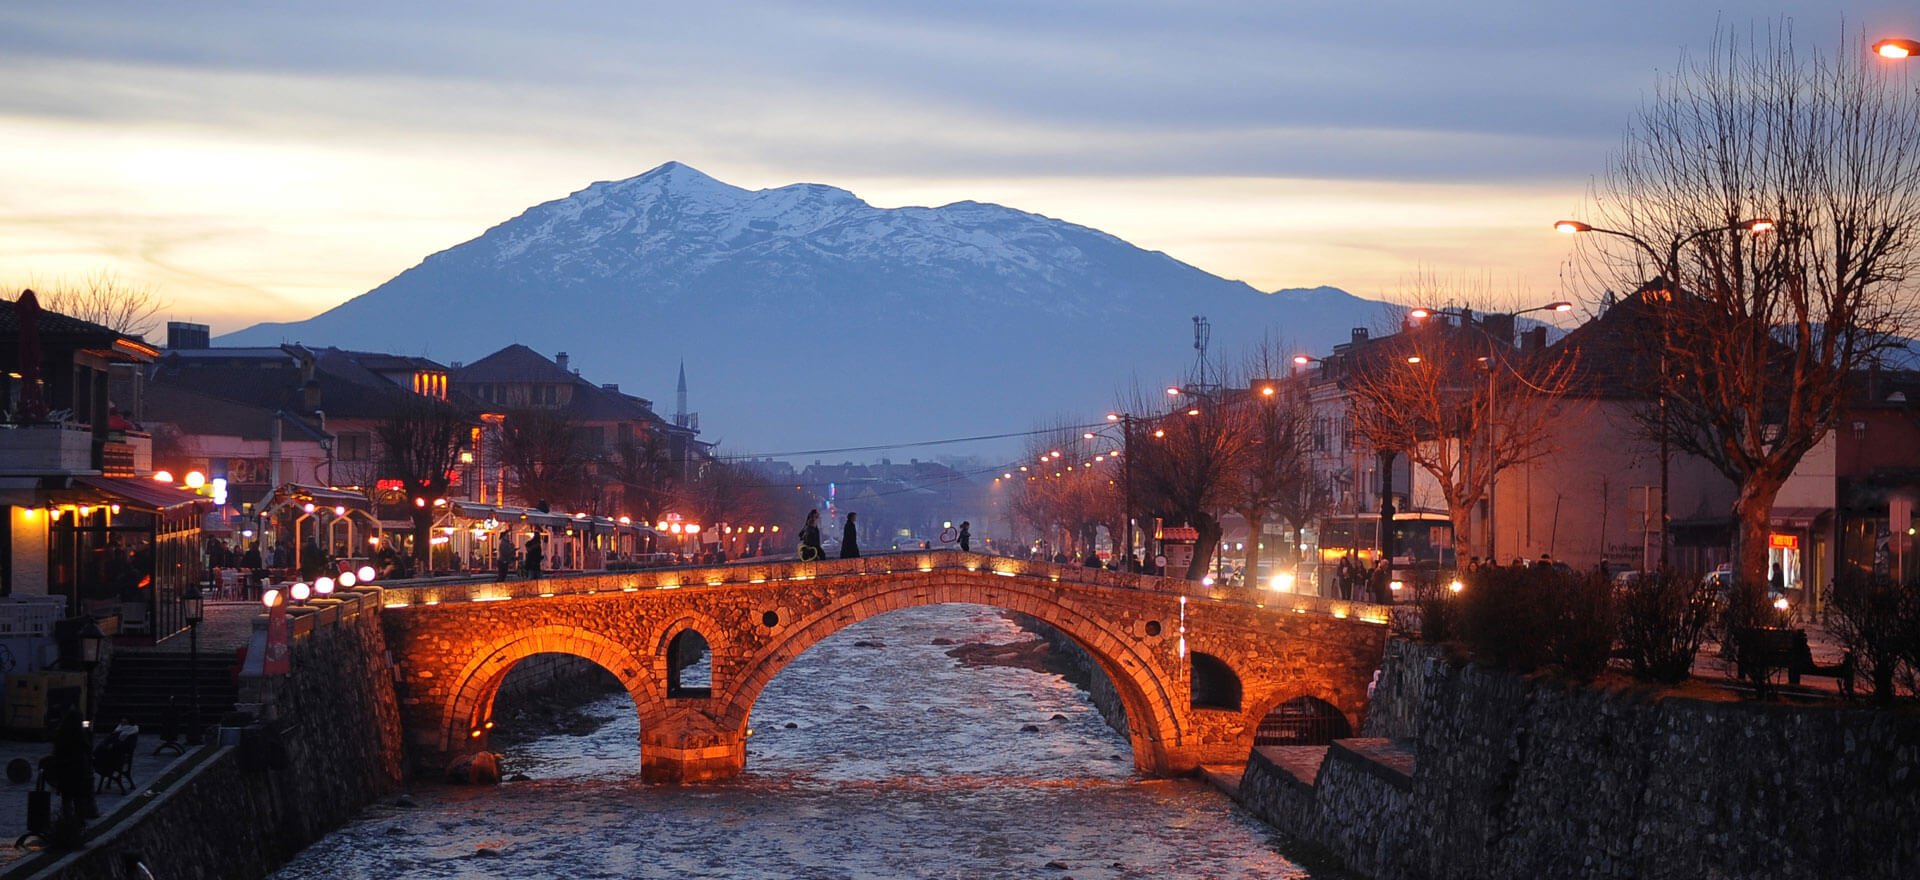 Kosovo holidays and tours - scene at night